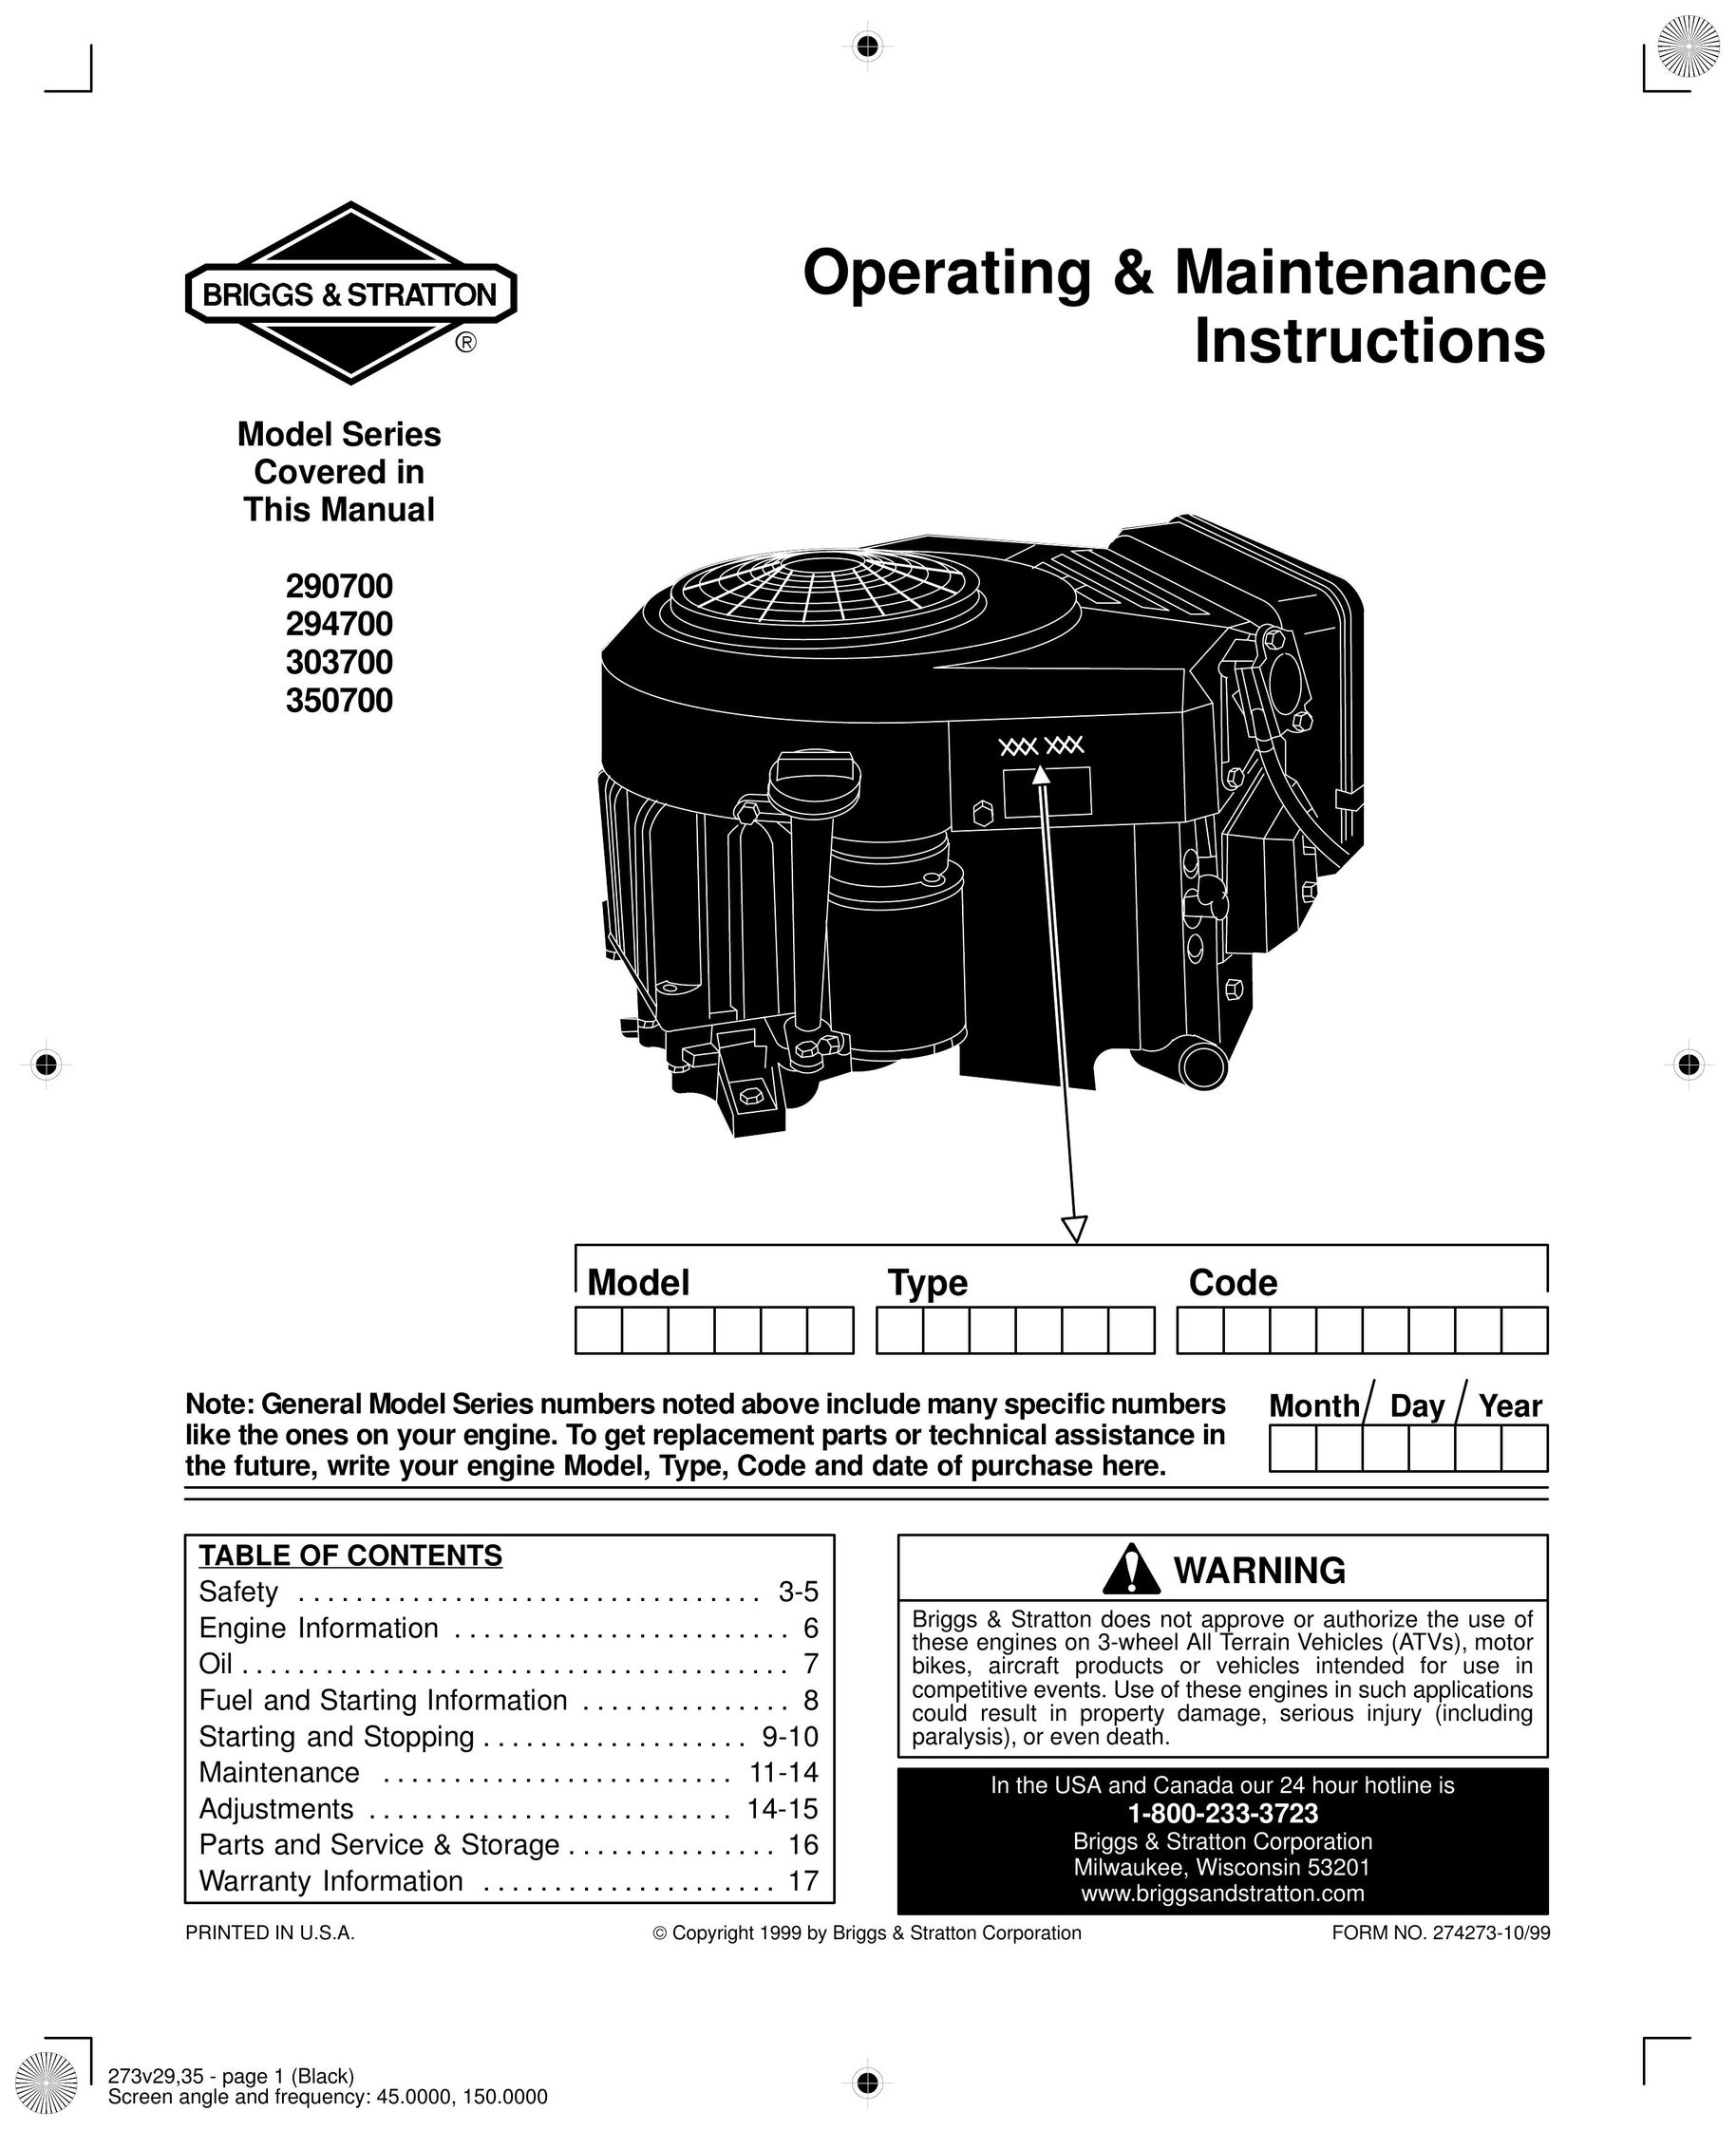 Briggs & Stratton 350700 Plumbing Product User Manual